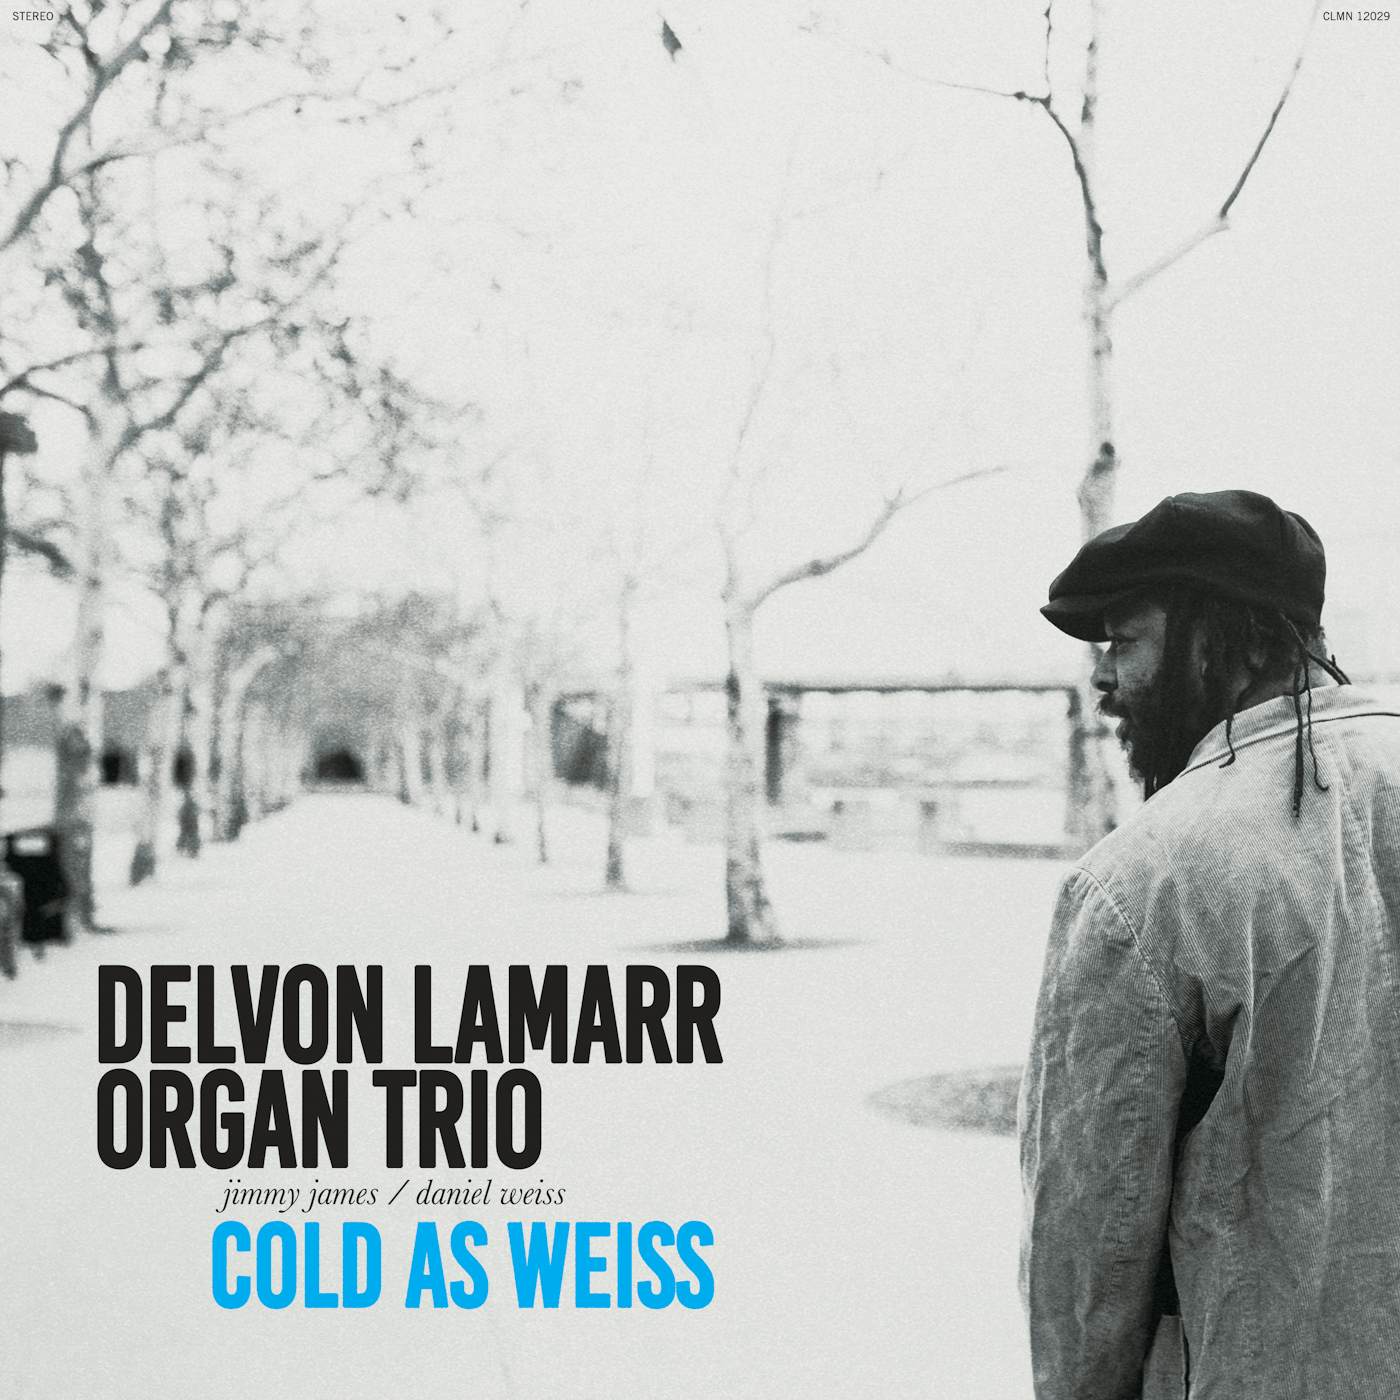 Delvon Lamarr Organ Trio COLD AS WEISS CD